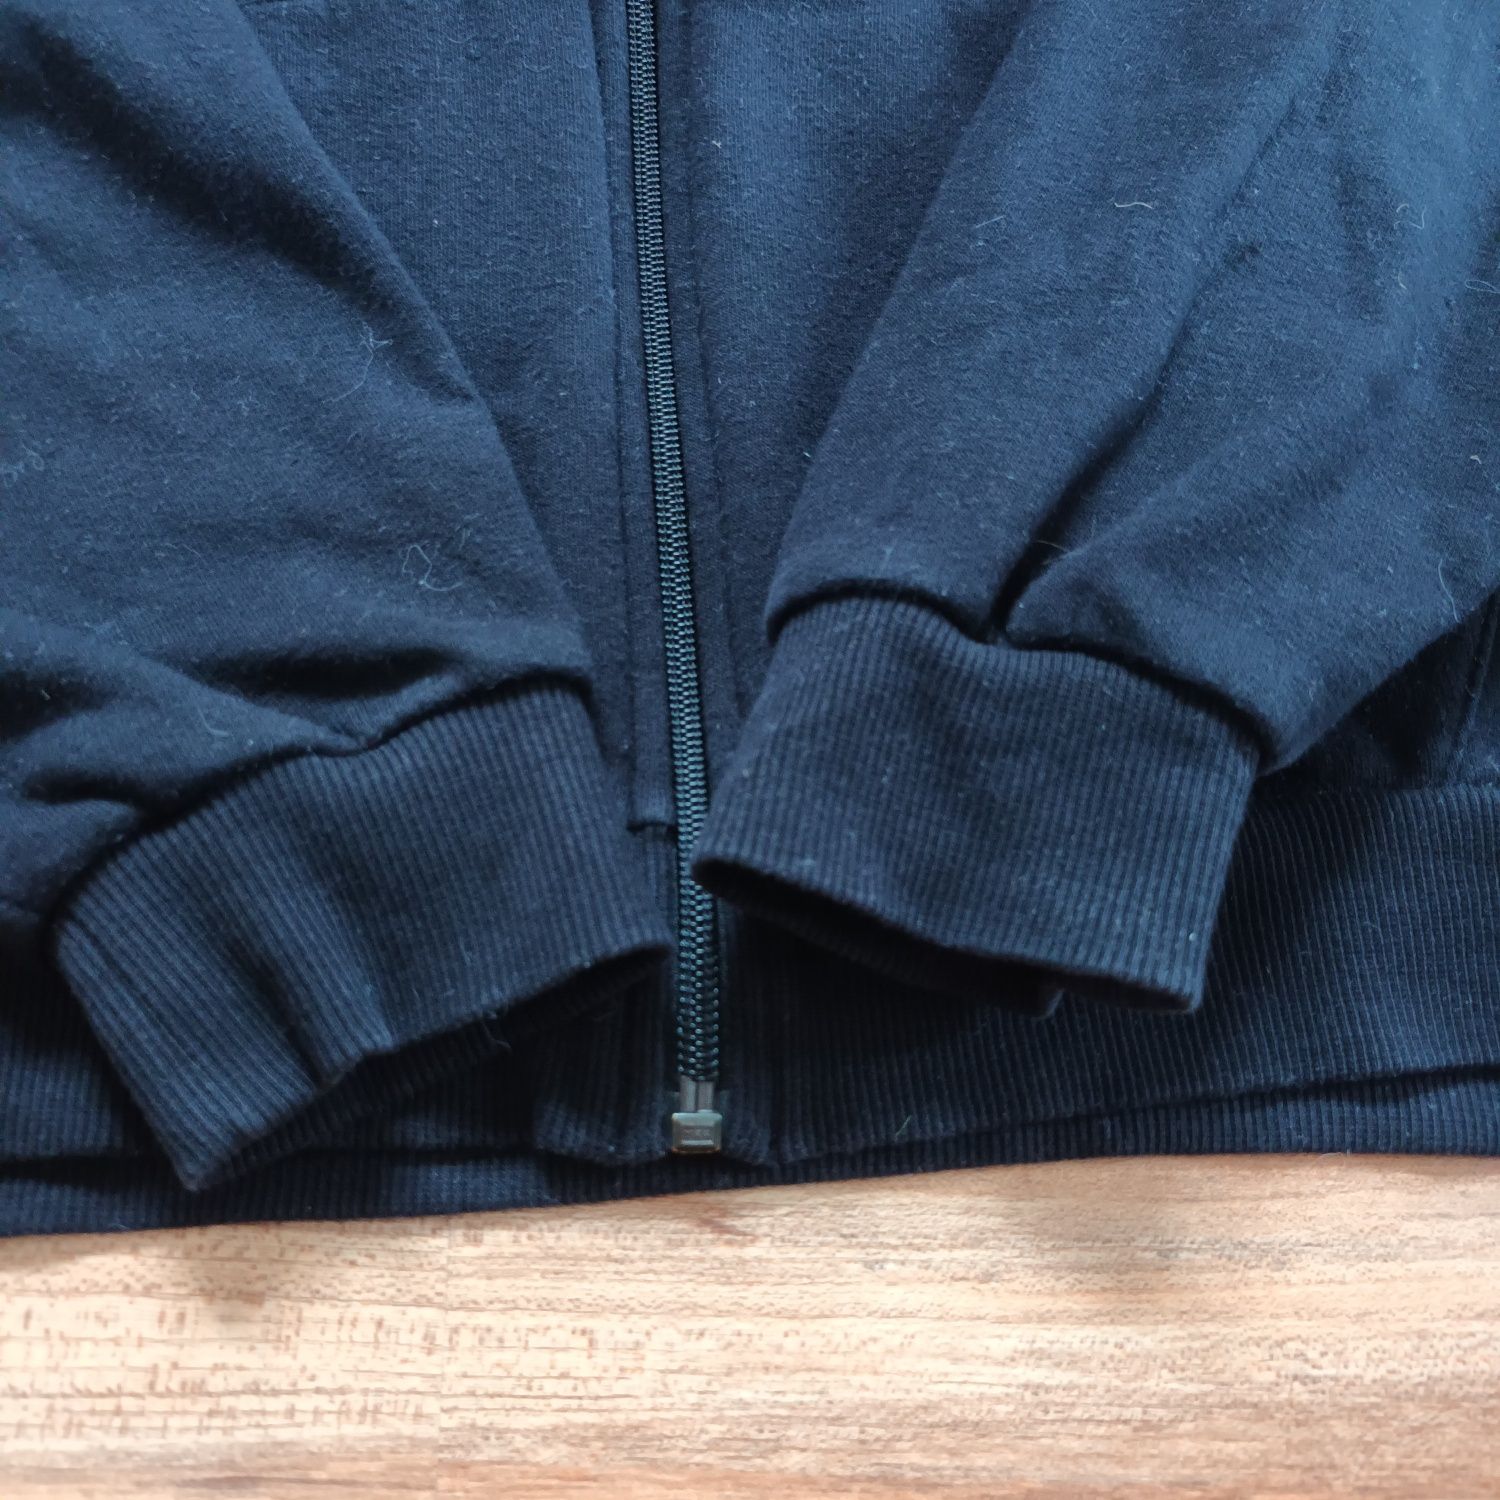 Bluza 146 152 H&M czarna rozpinana z kapturem